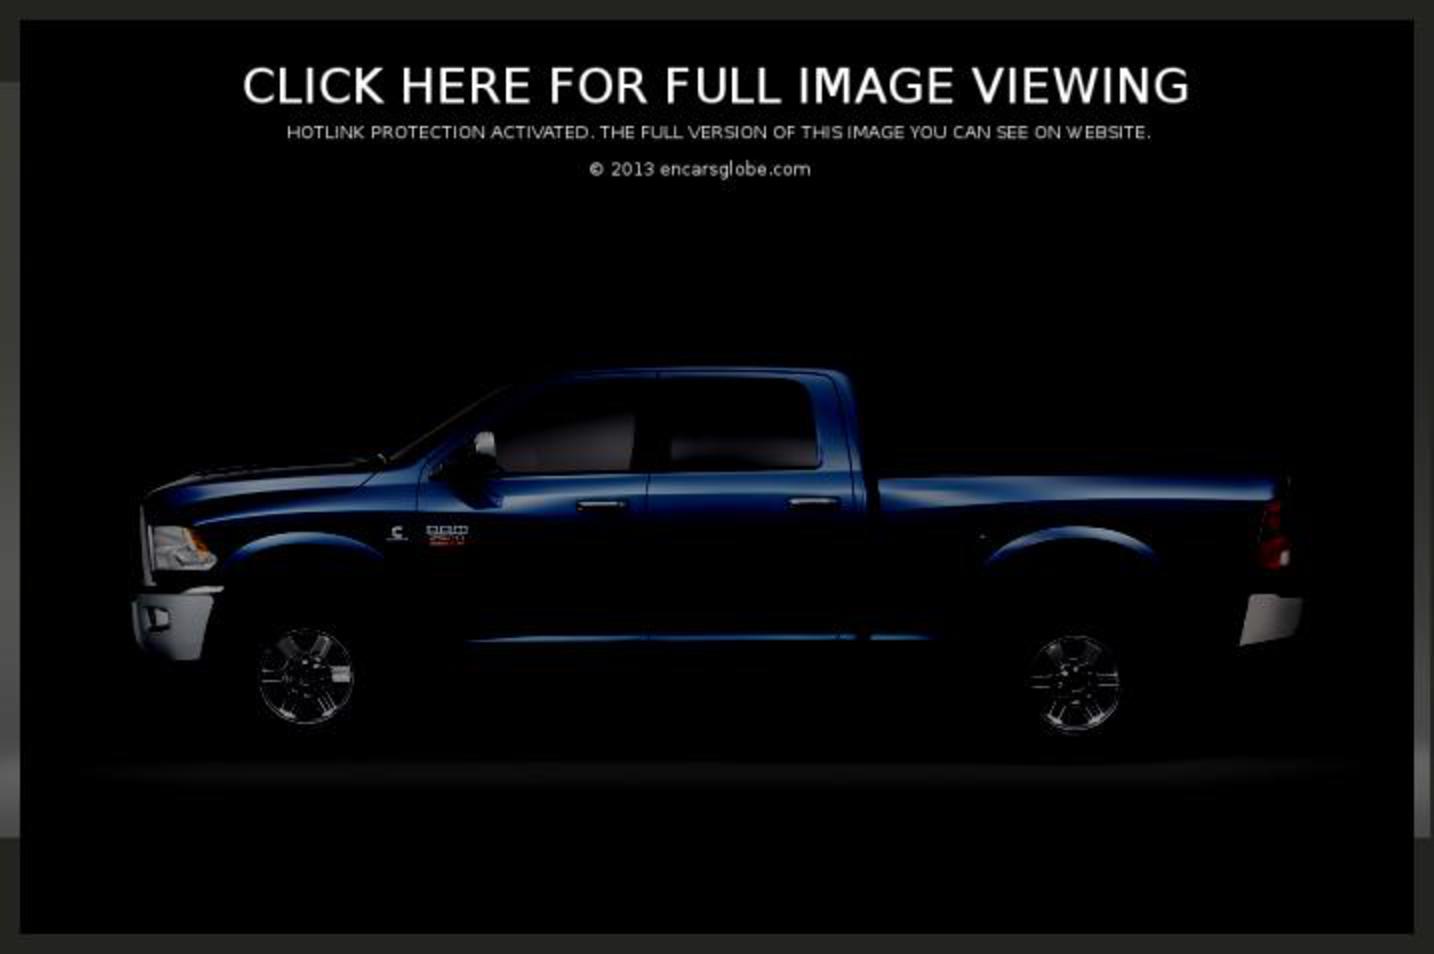 Dodge RAM 2500 Pick-Up (02 image) Size: 717 x 477 px | 25662 views